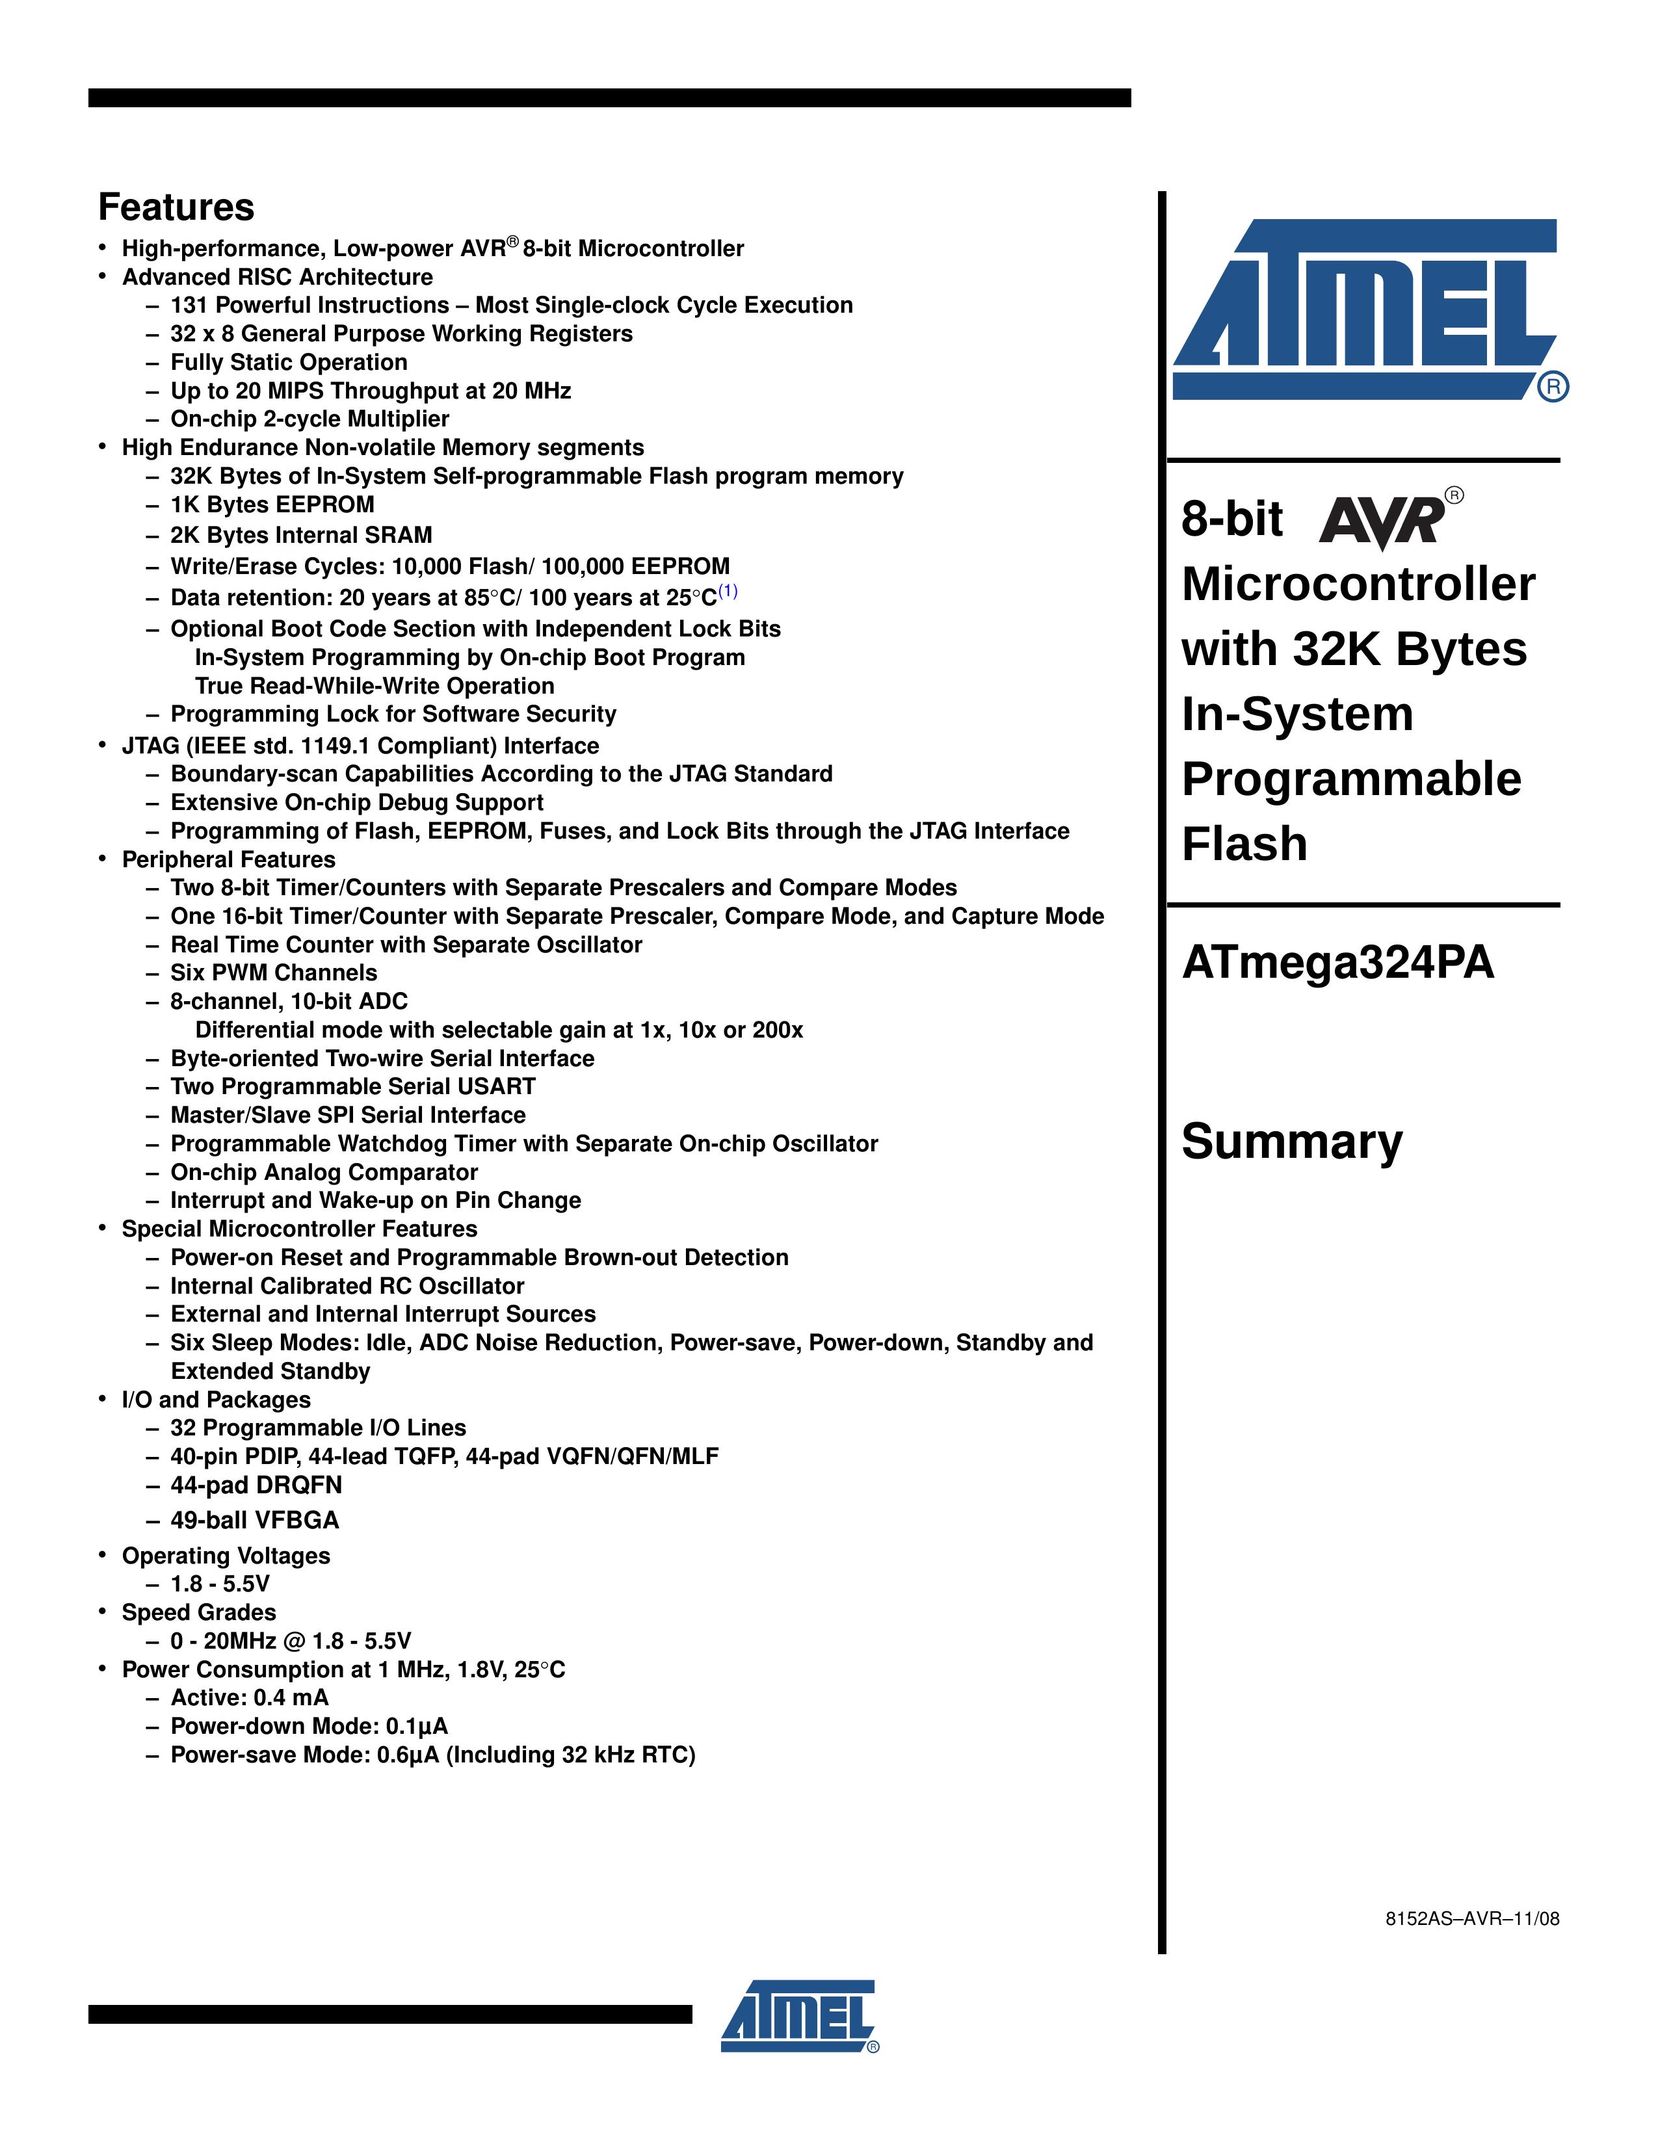 Atmel ATmega324PA Computer Hardware User Manual